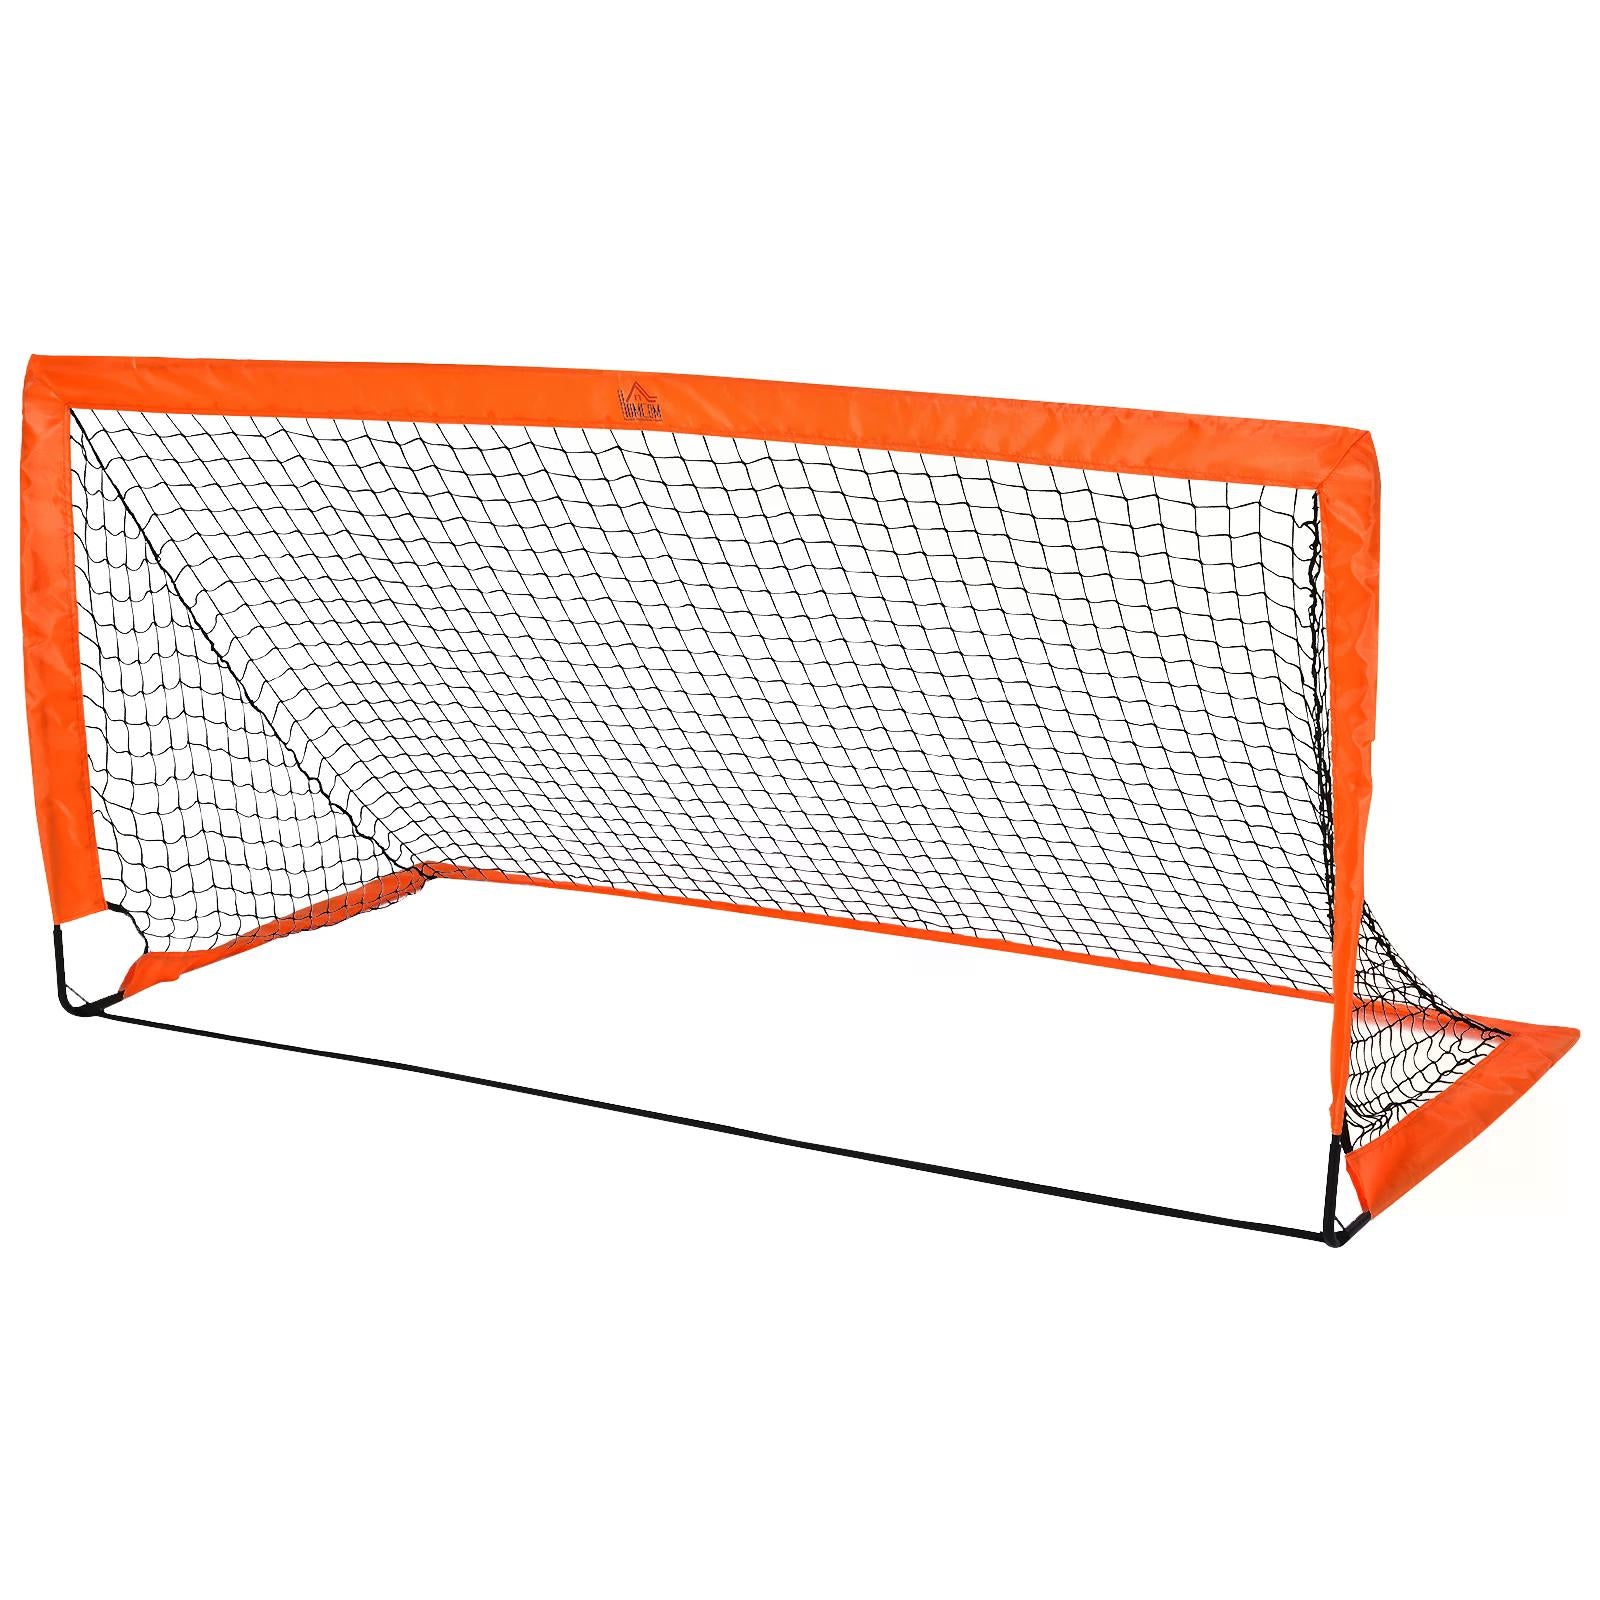 Tetoron Mesh Outdoor Folding Football Goal Orange-1